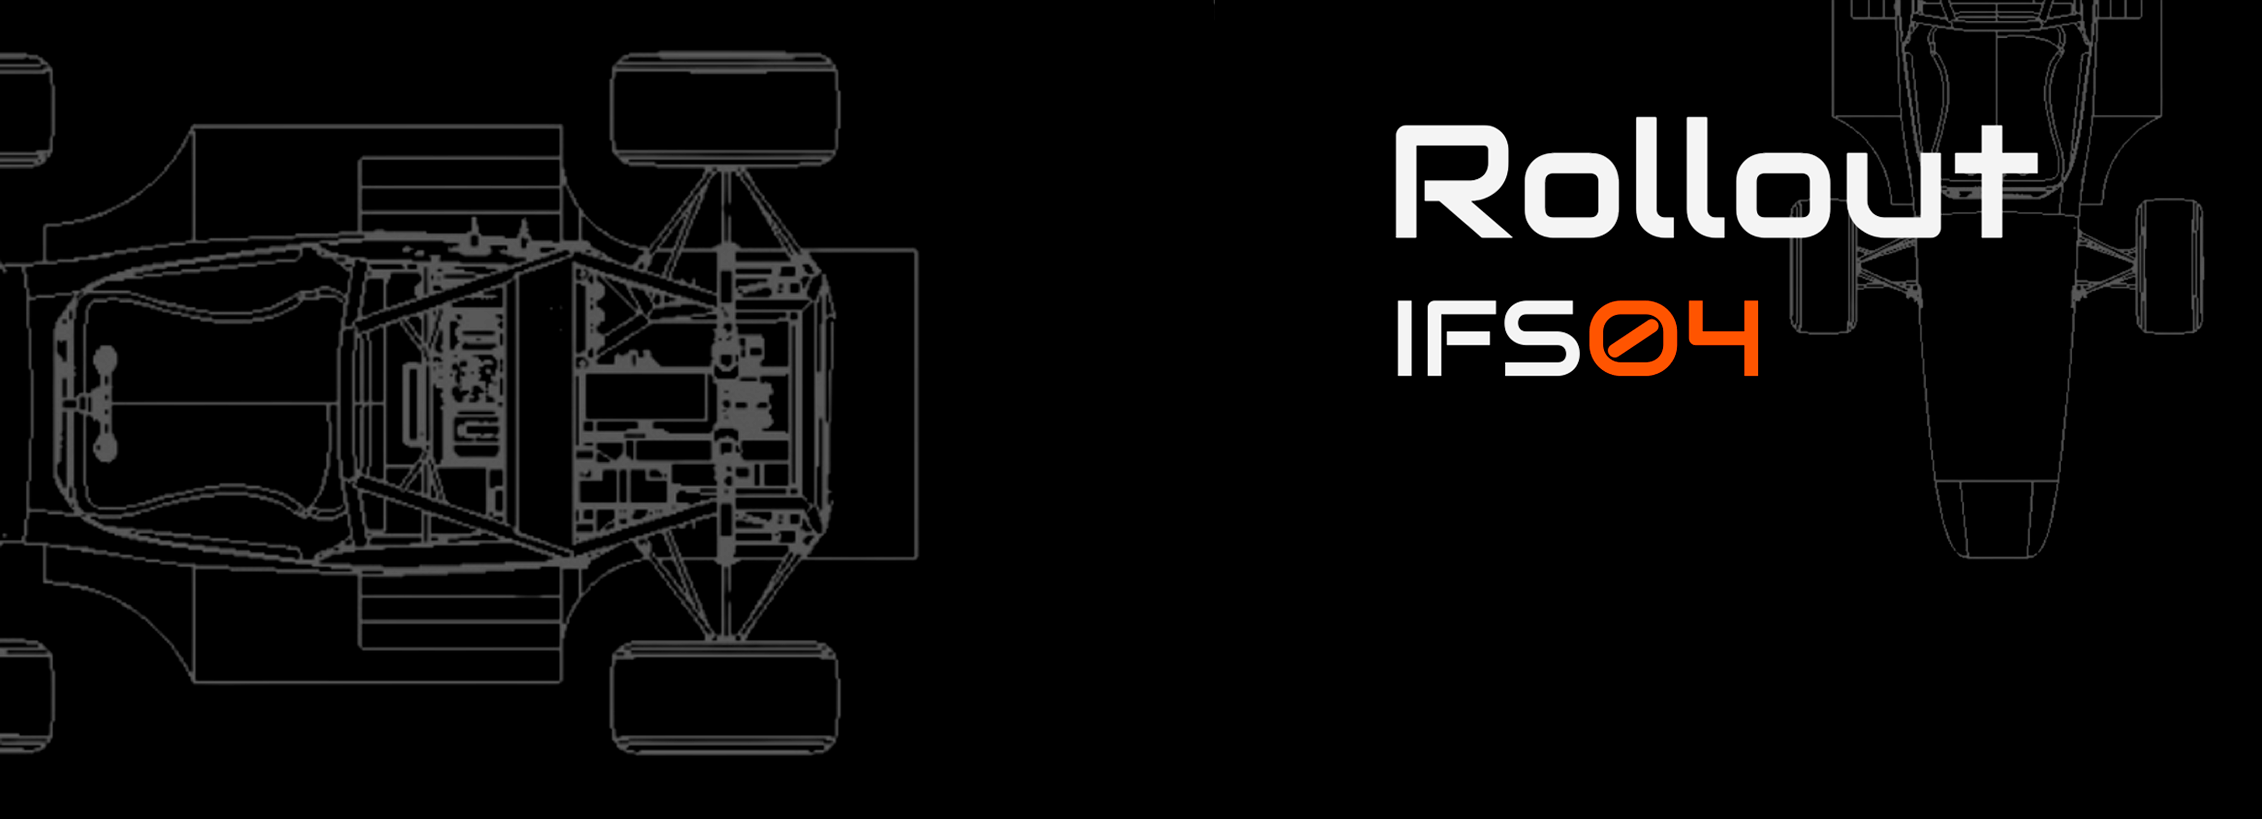 ISEL Formula Student novo protótipo IFS04